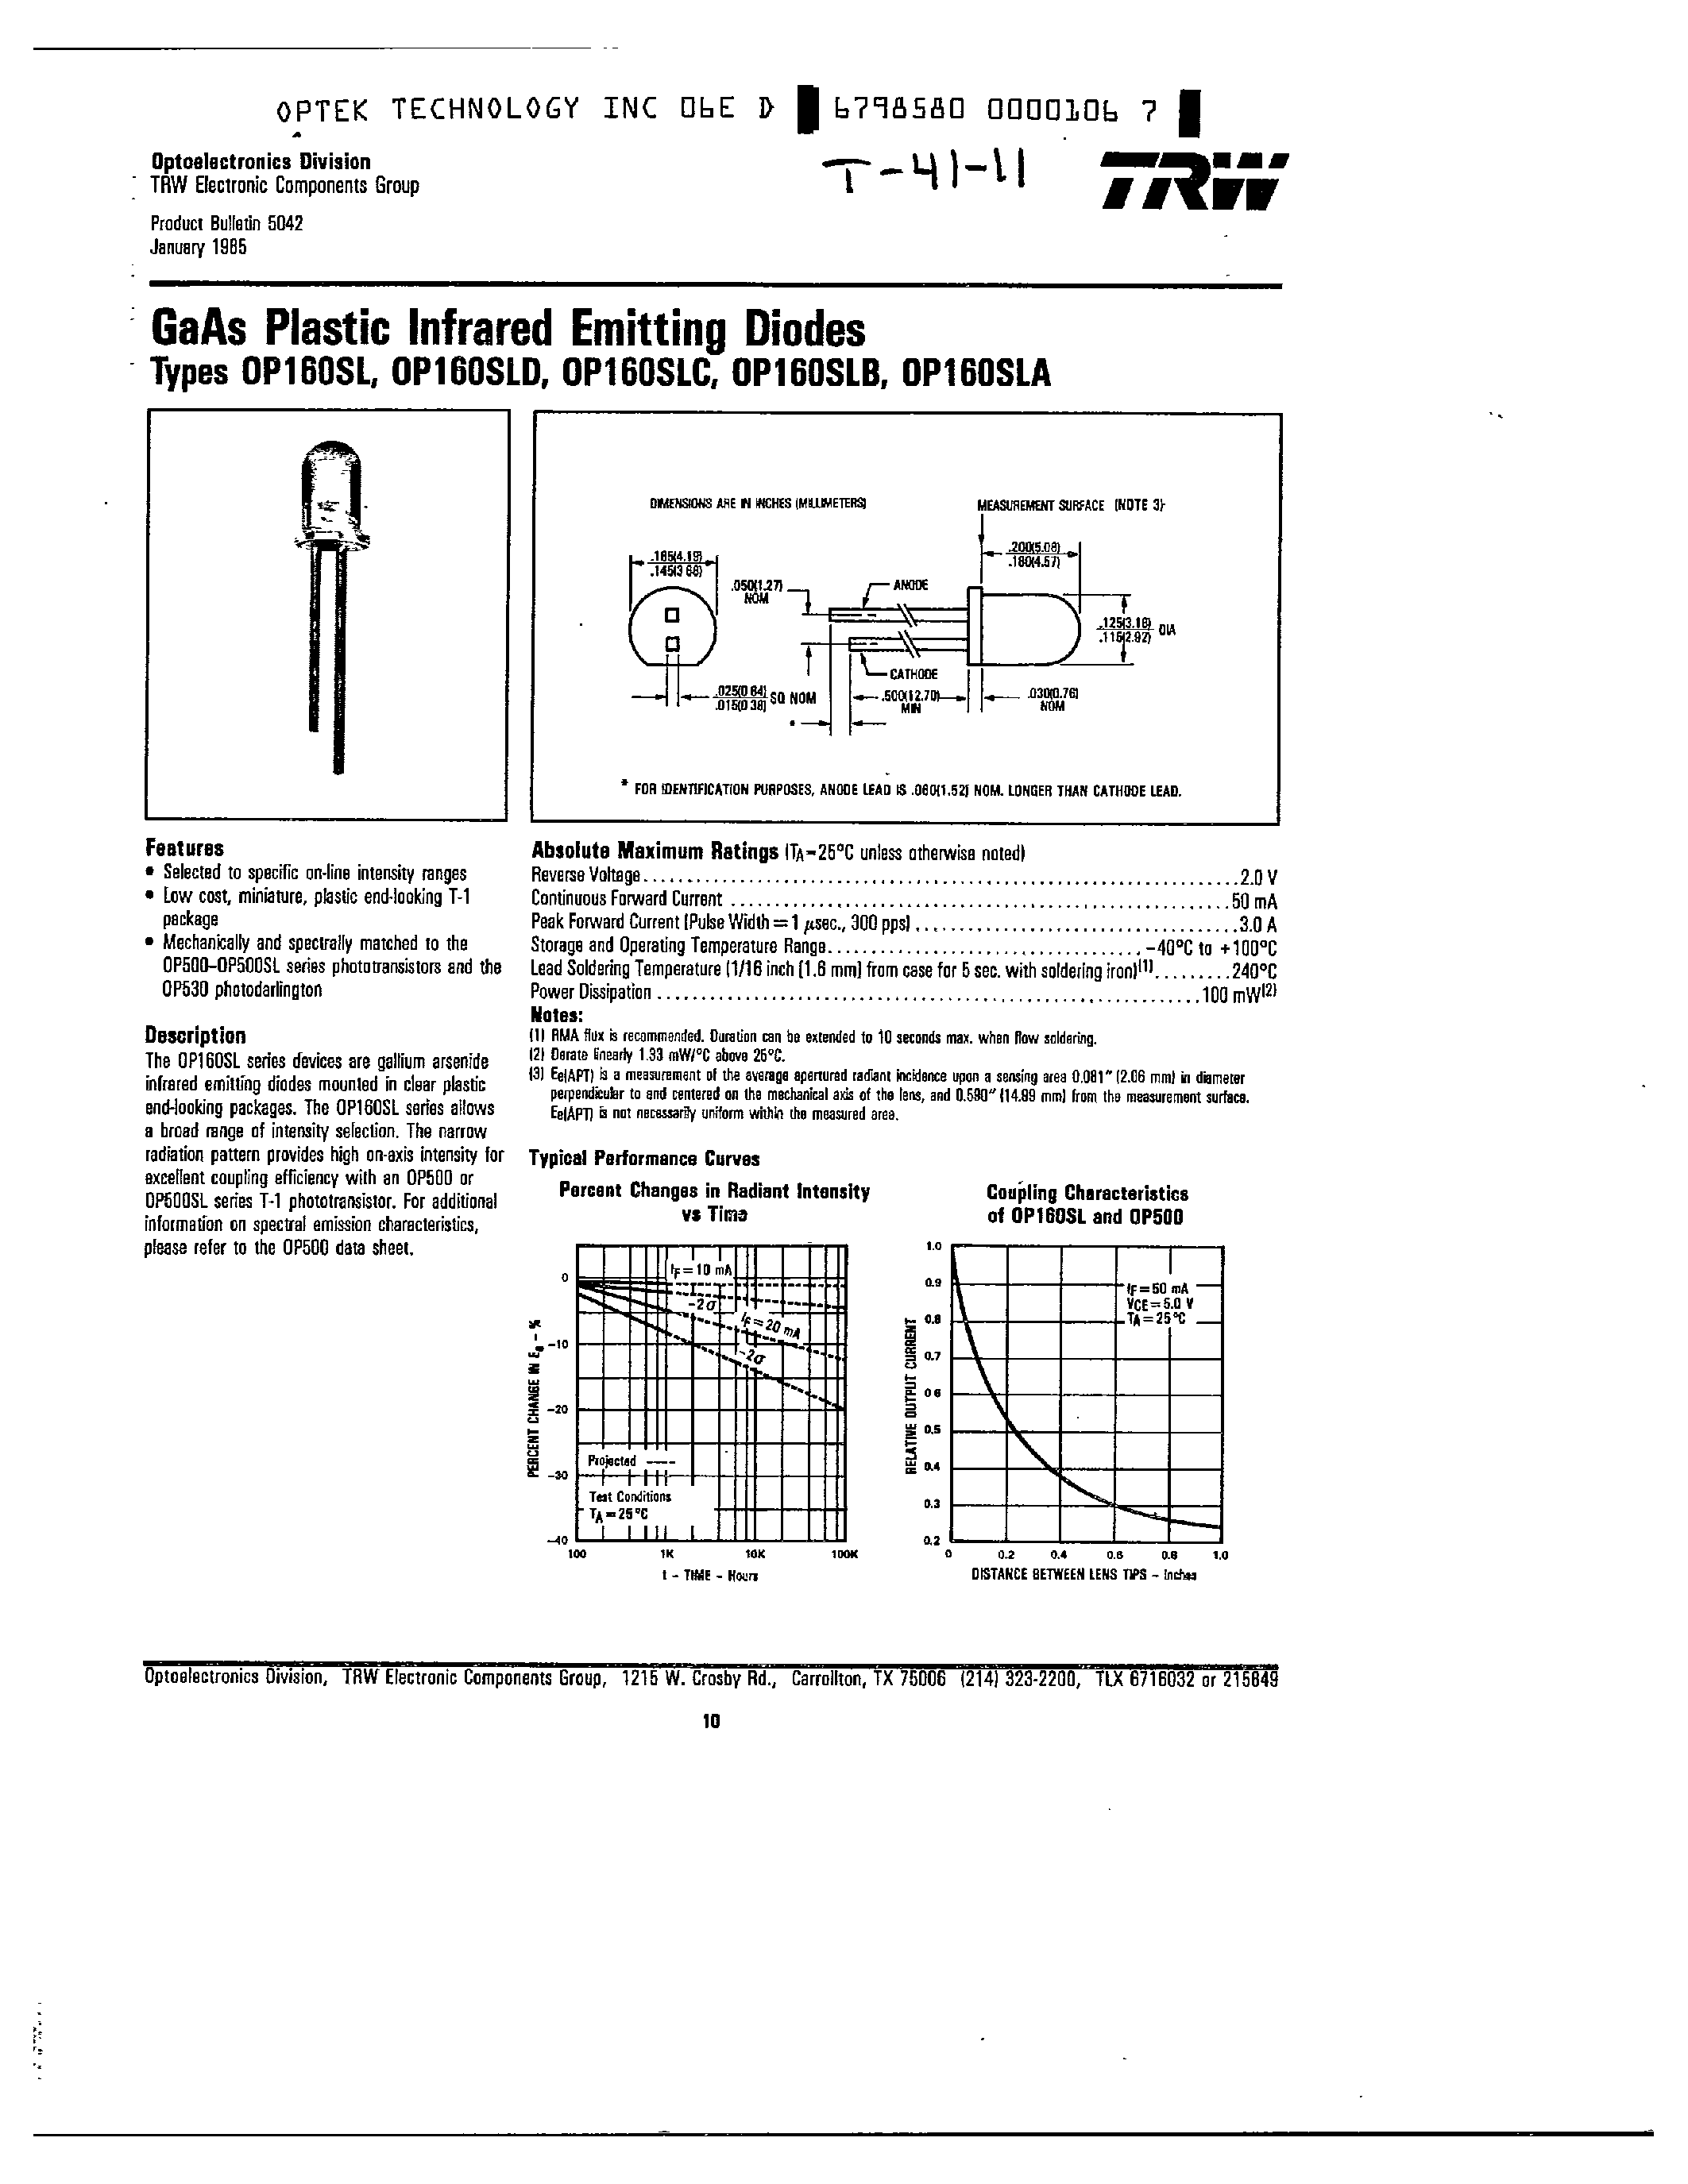 Datasheet OP160SL - GAAS PLASTIC INFRARED EMITTING DIODES page 1